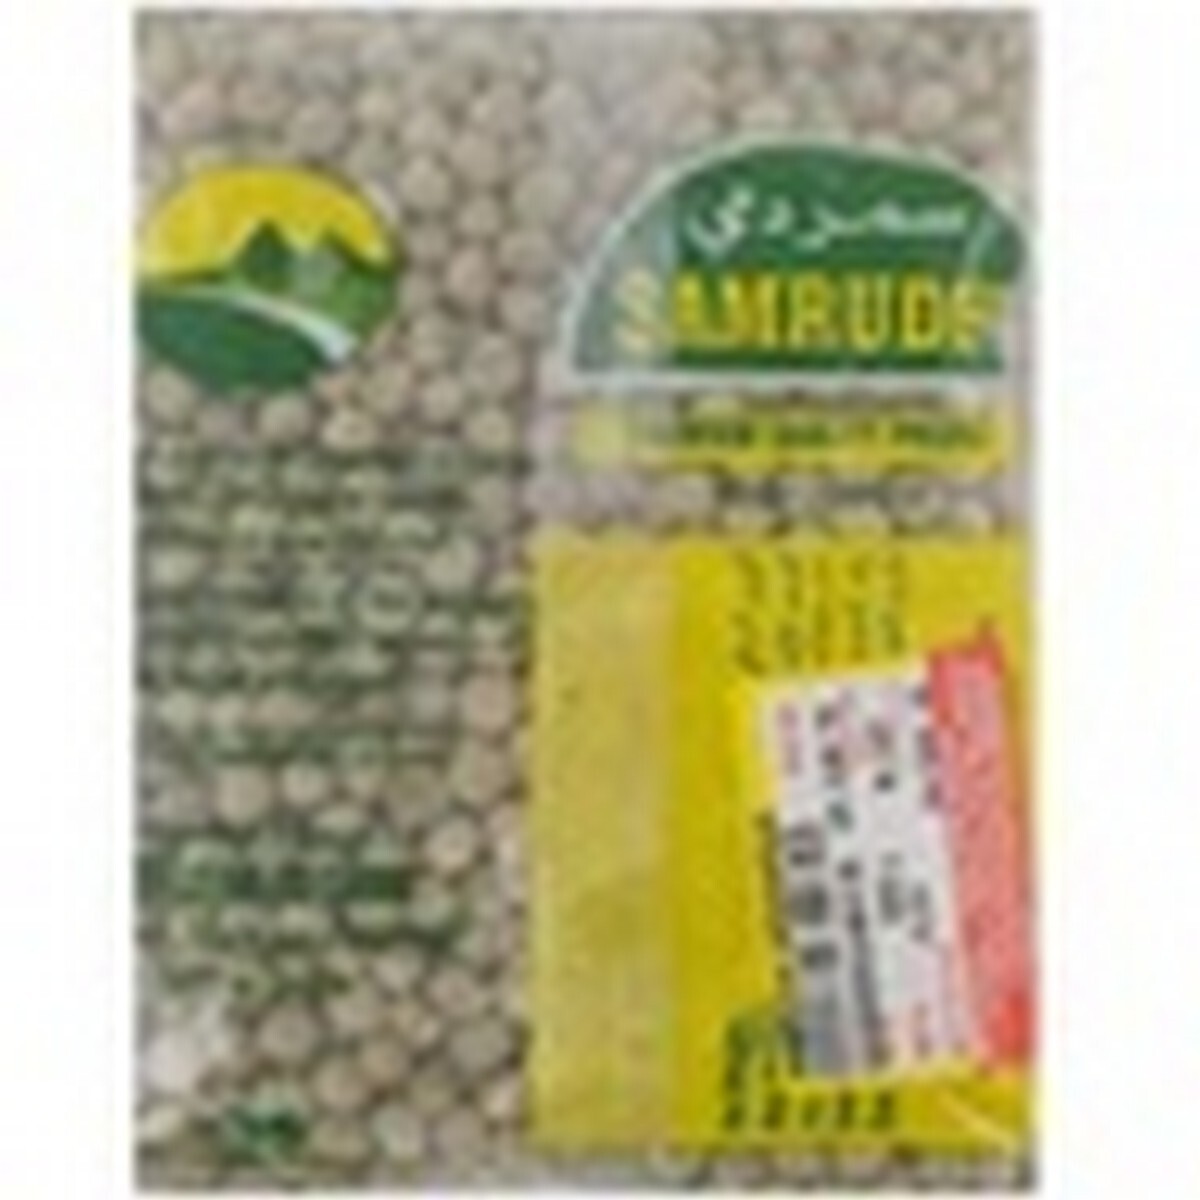 Samrudhi Green Peas 500gm